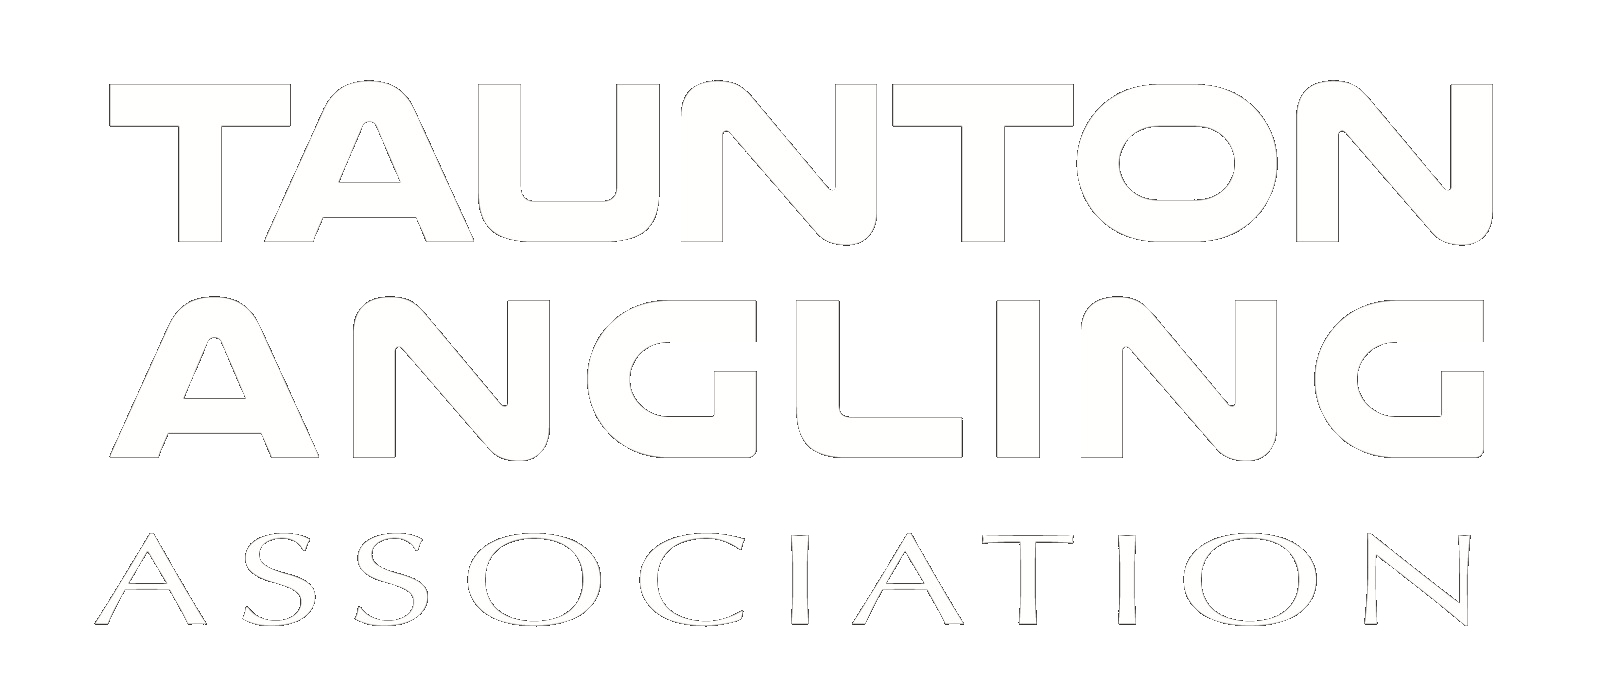 Taunton Angling Association